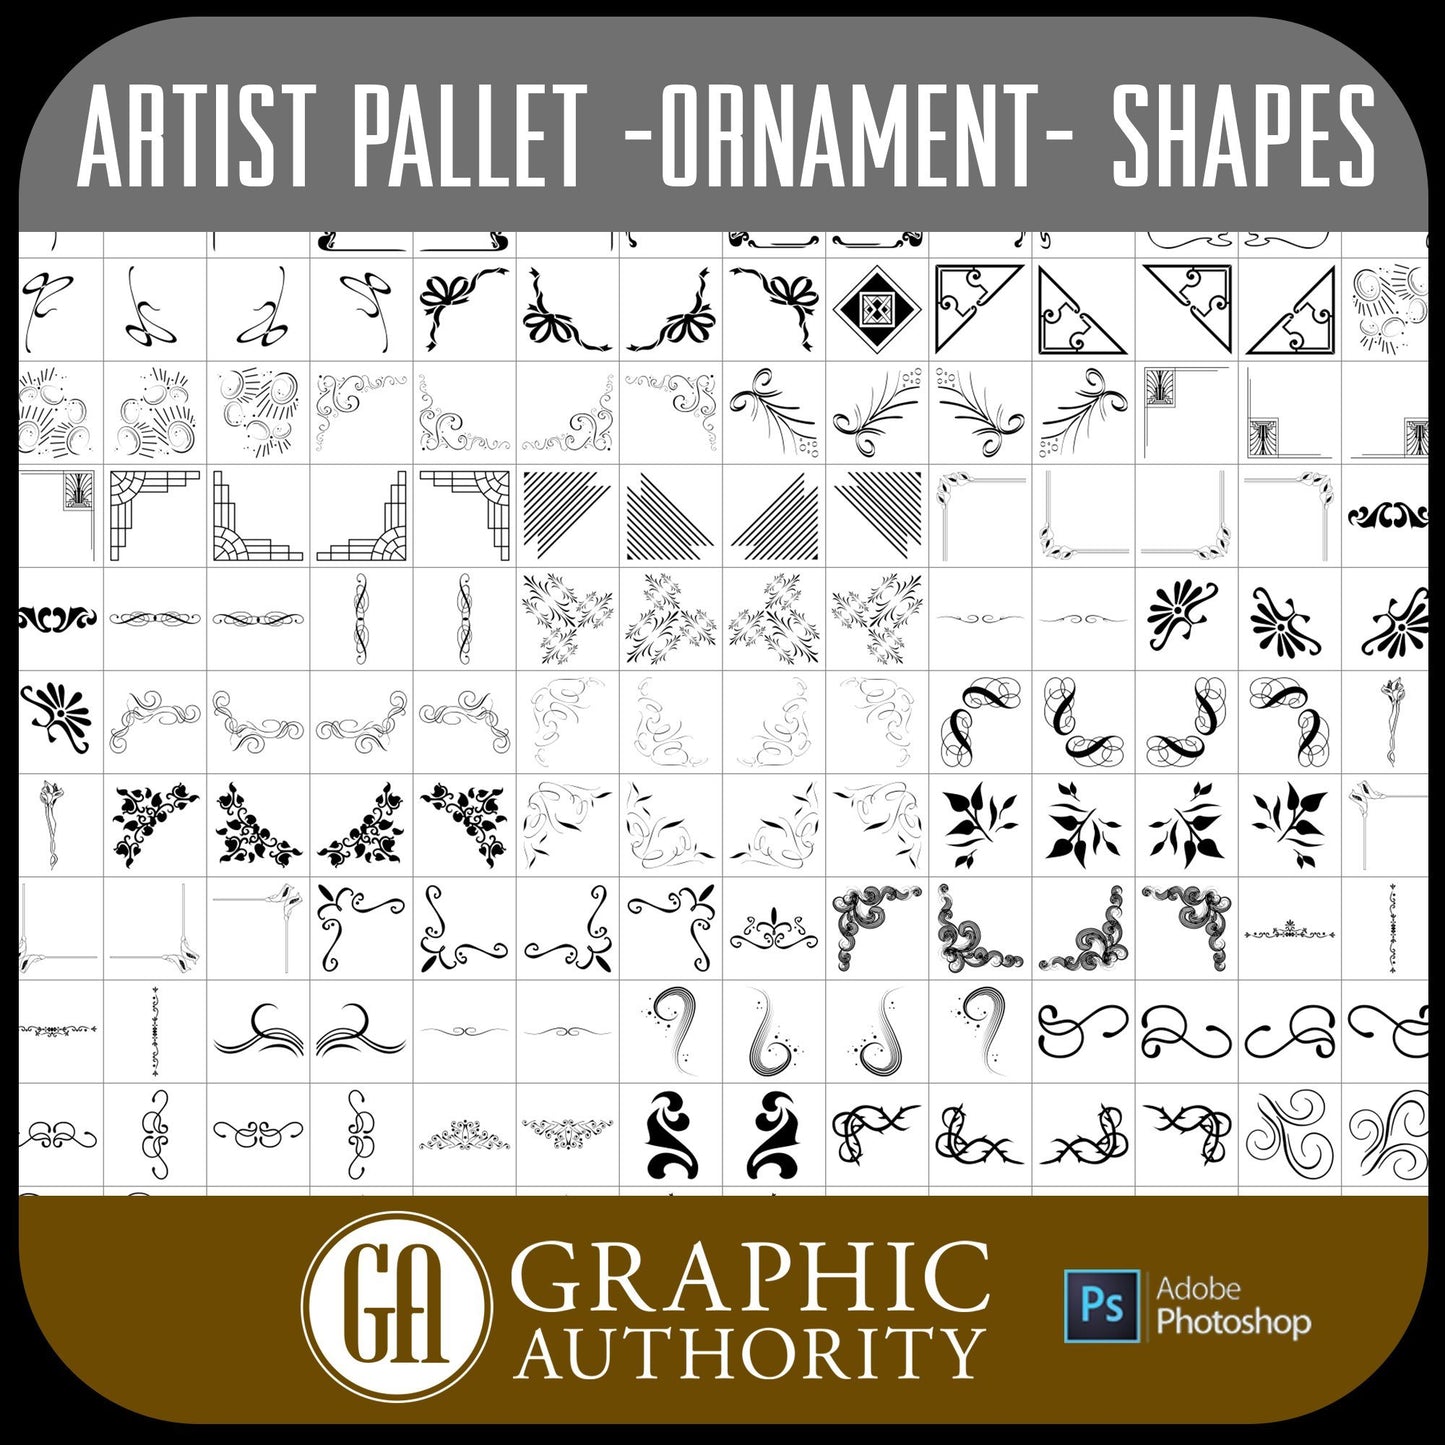 Artist Pallet - Ornaments - Vector .CHS Photoshop Shapes-Photoshop Template - Graphic Authority